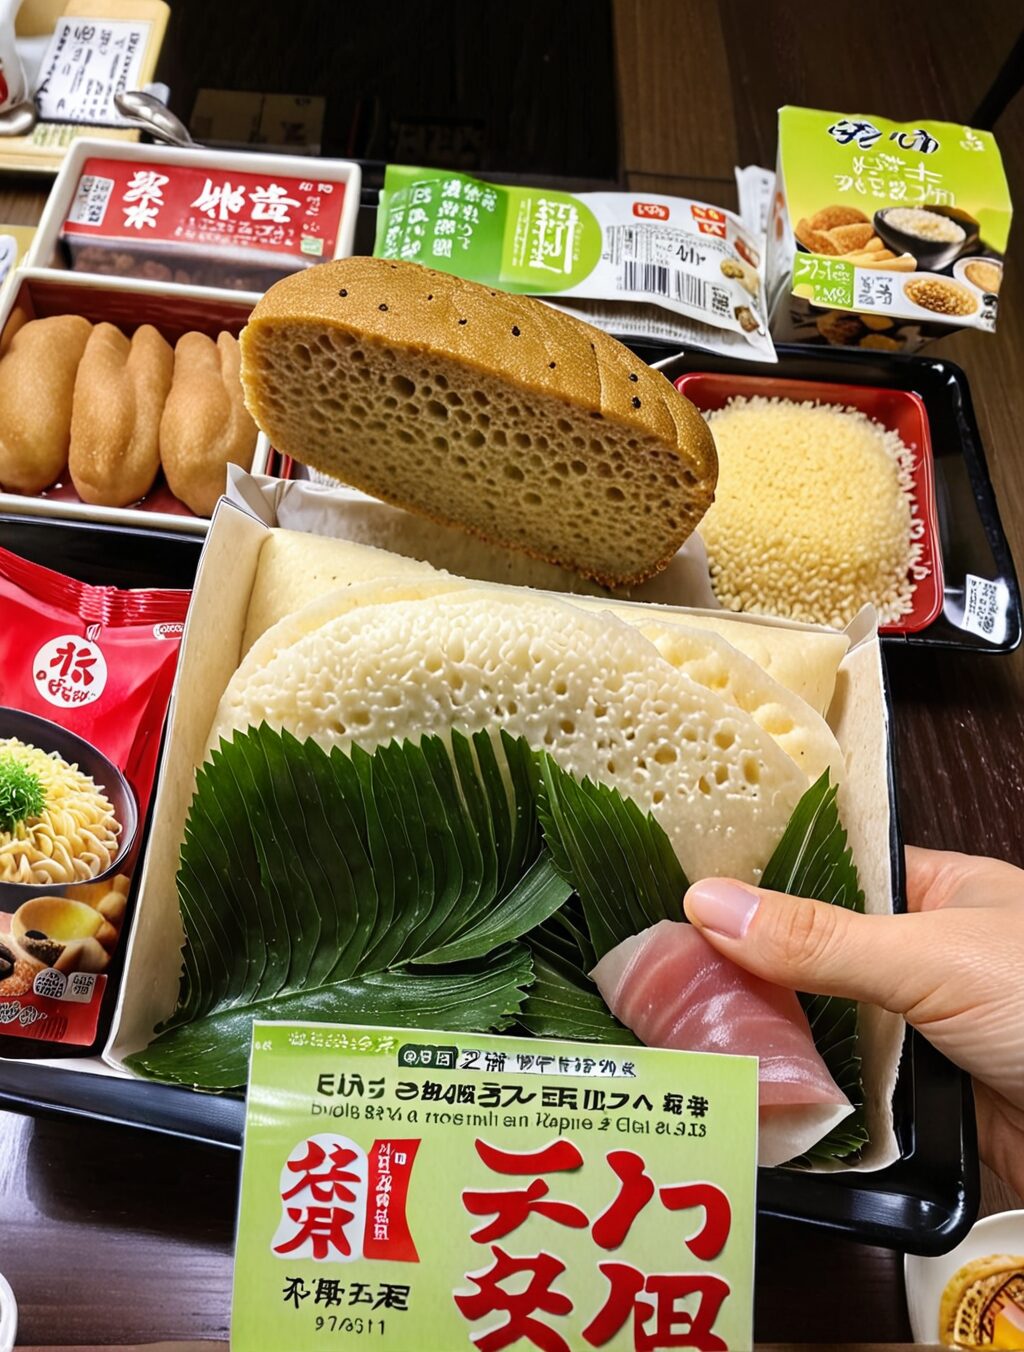 eating gluten free in japan